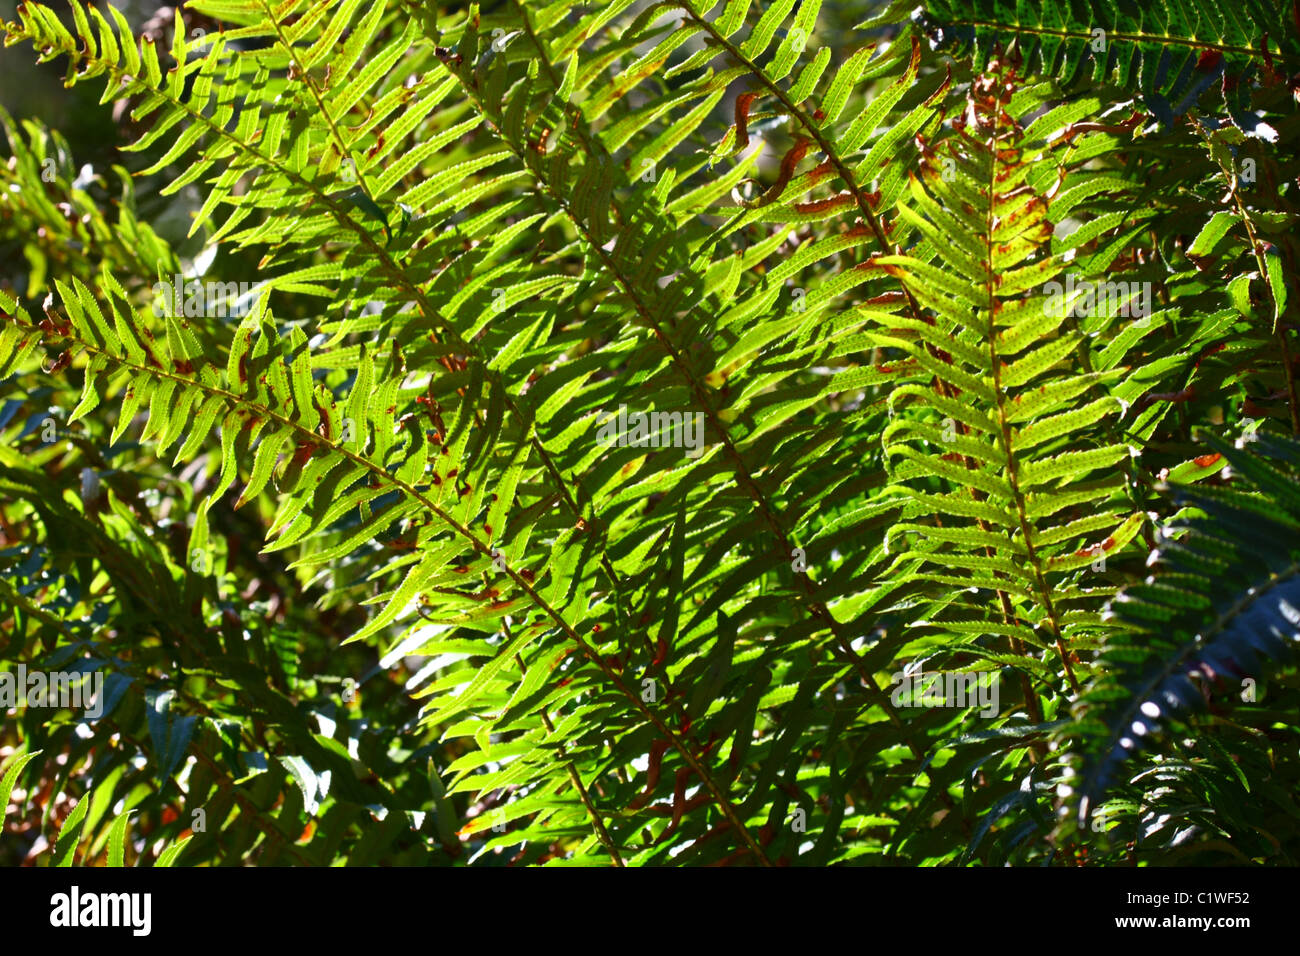 40,575.02626 Sun streaming onto dense green sword fern ground cover, undergrowth, back lighting Stock Photo